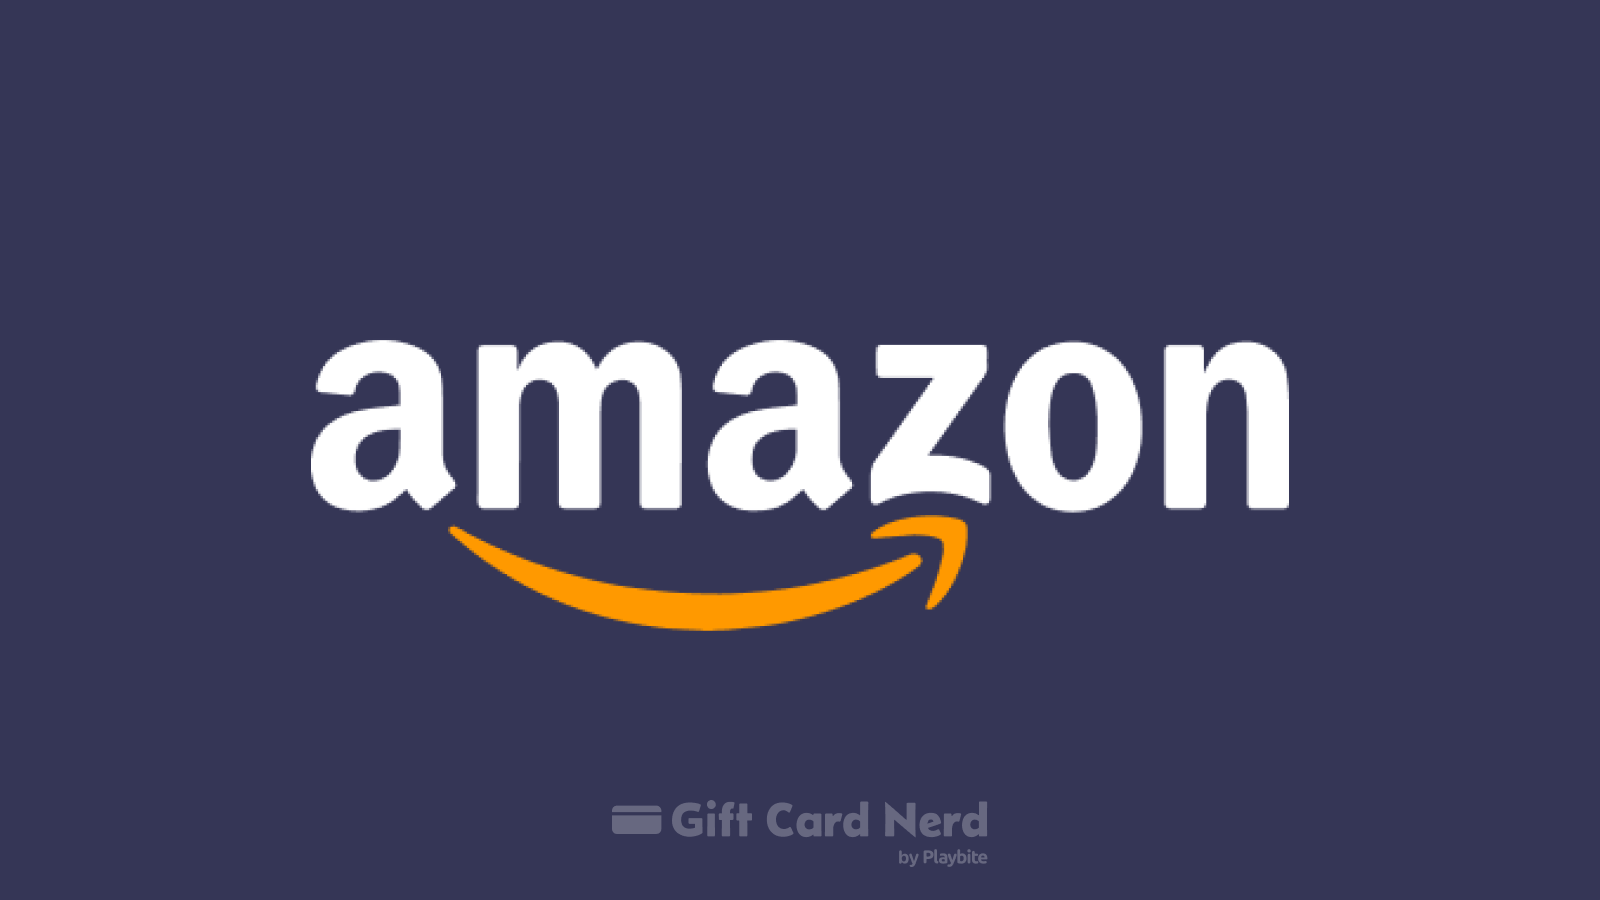 Can I Use an Amazon Gift Card on DoorDash?